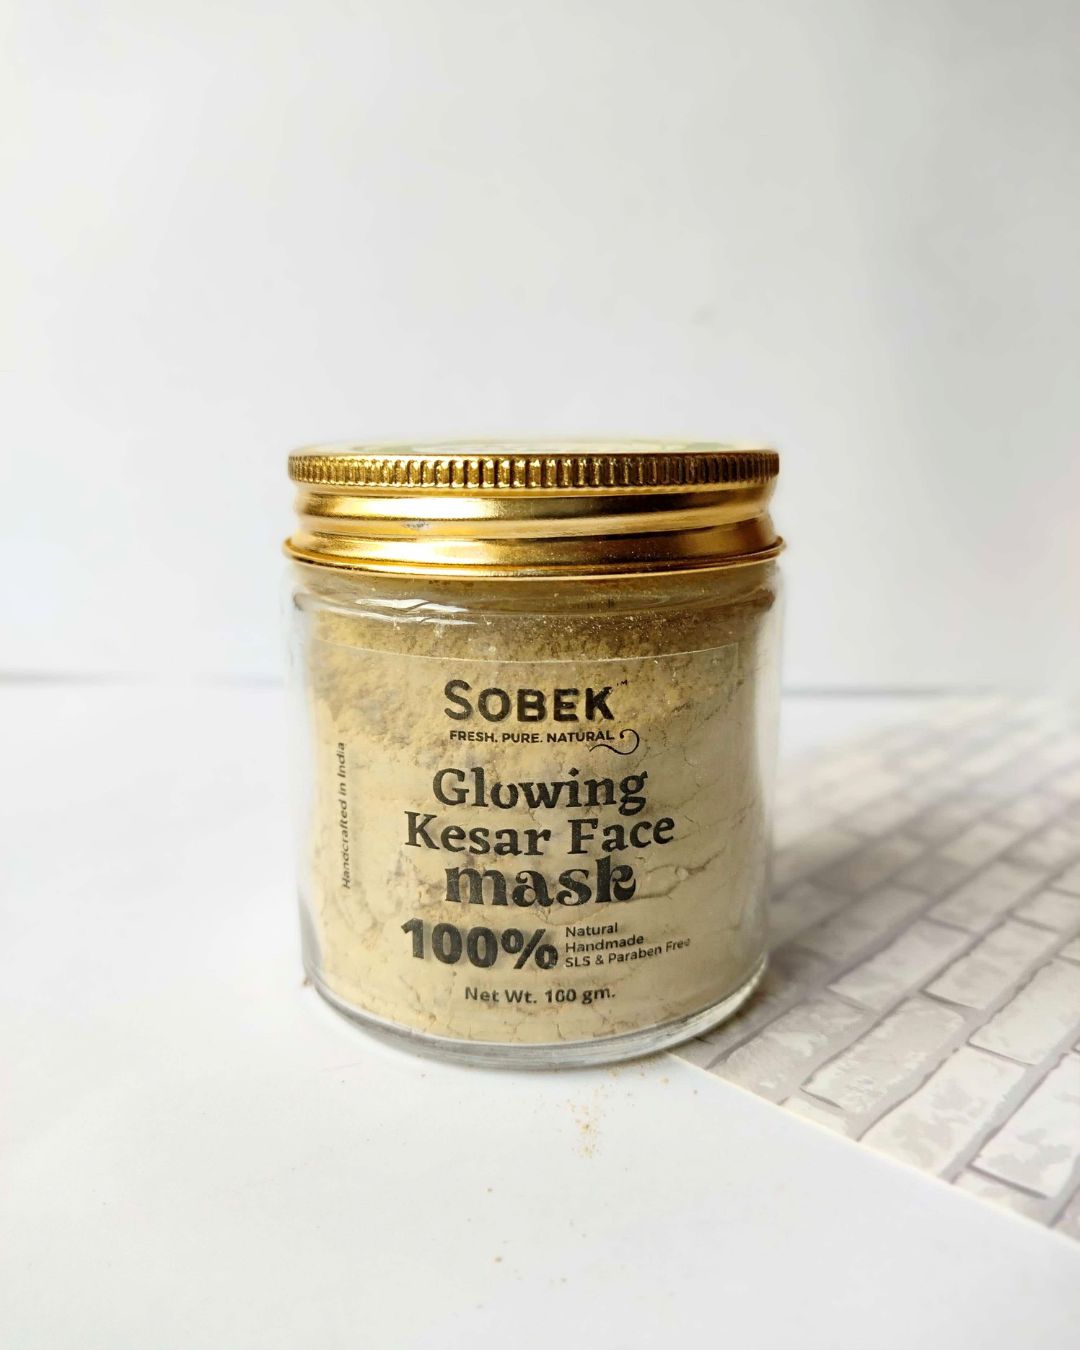 Glass jar with sobek brown kesar face mask powder on a white backdrop